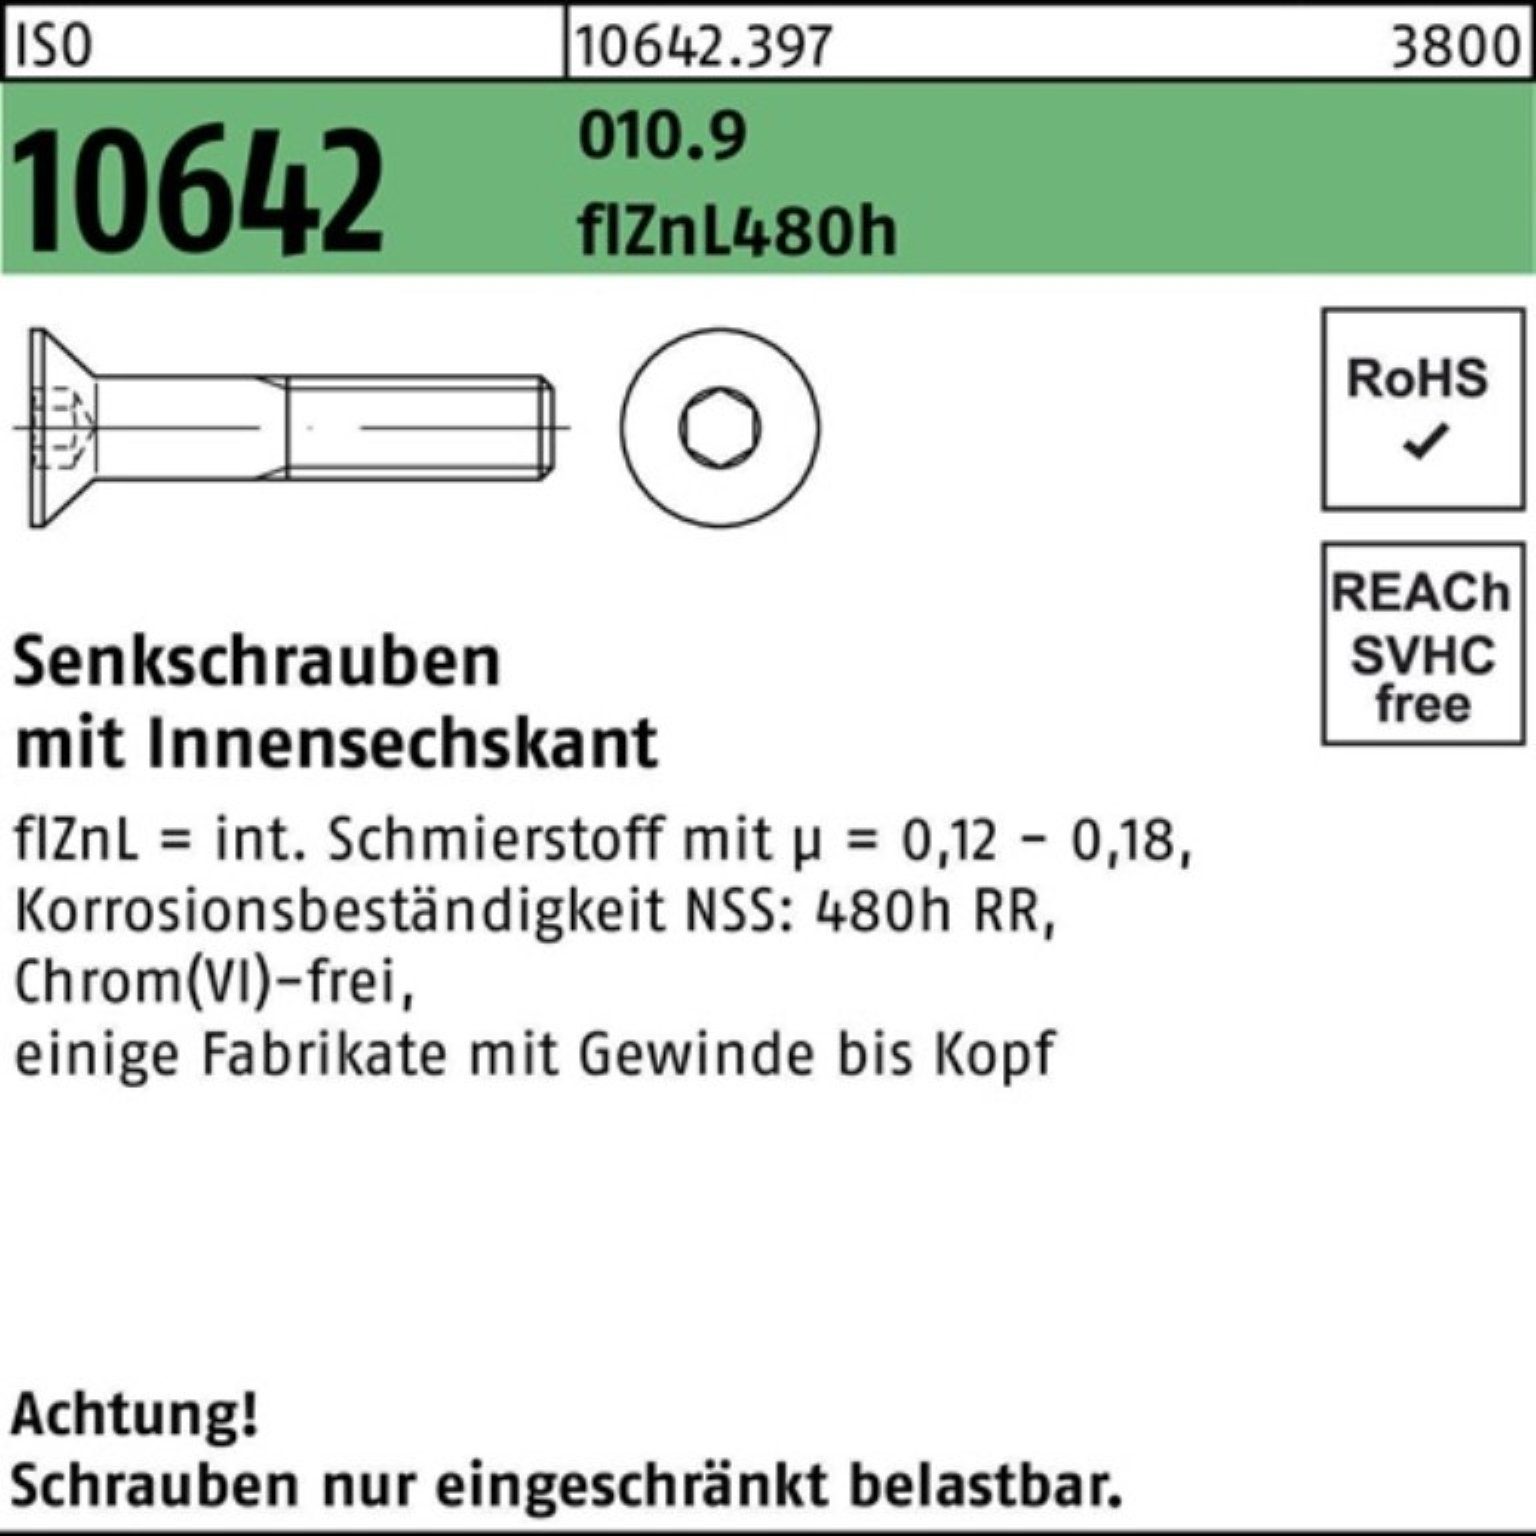 Reyher Senkschraube 200er Pack Senkschraube ISO 10642 Innen-6kt M8x30 010.9 flZnL 480h zin